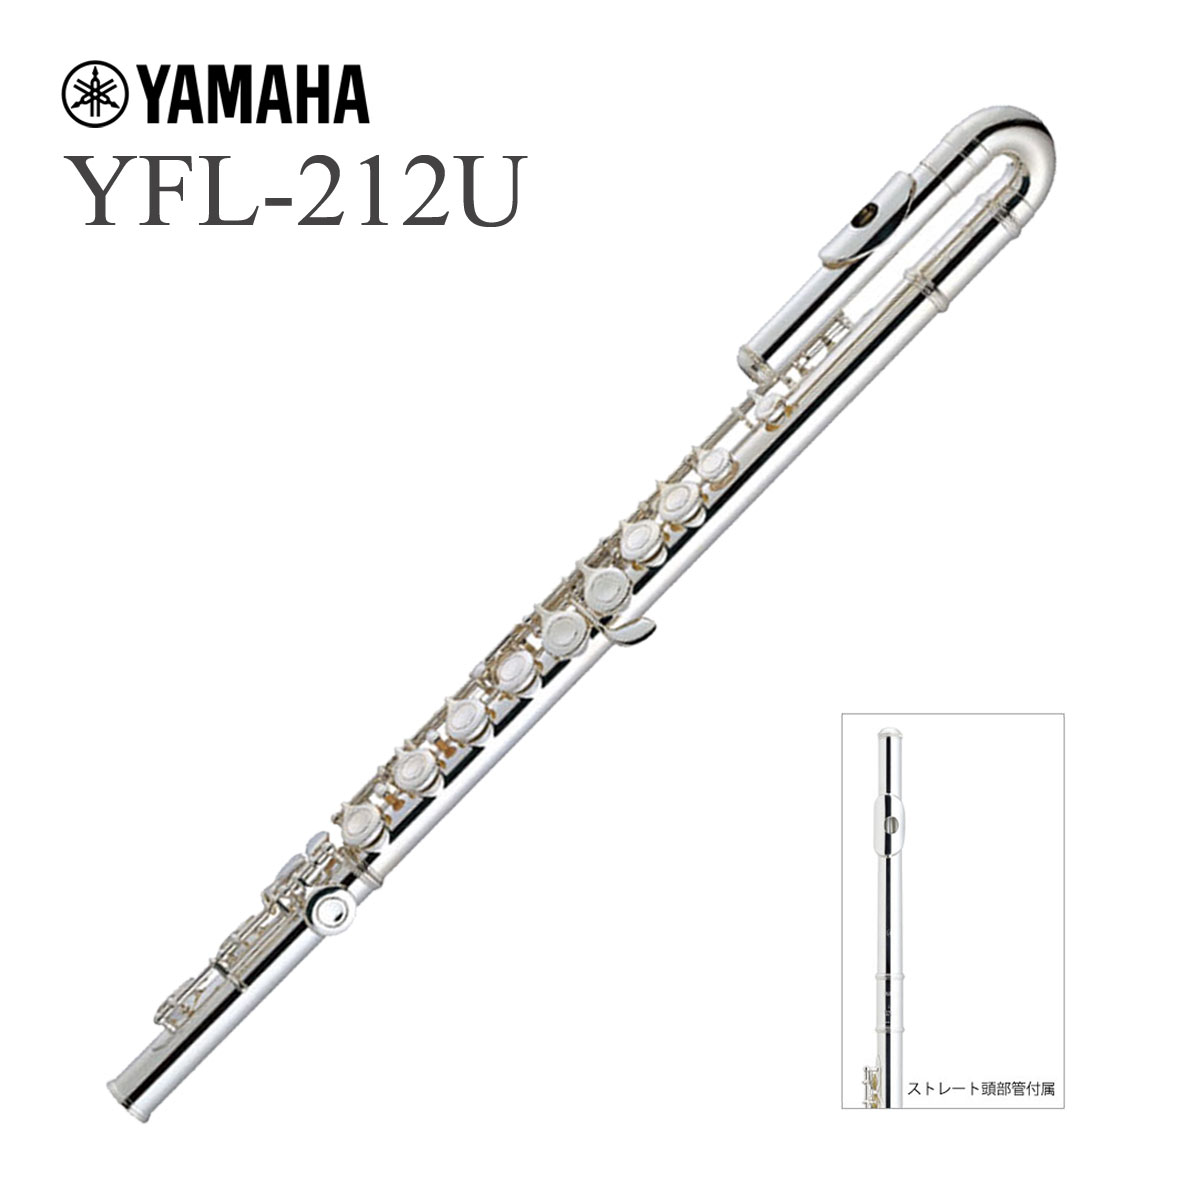 YAMAHA / YFL-212U ヤマハ スタンダード YFL212U Eメカ付き ストレート頭部管付き  《出荷前調整》《5年保証》【安心アフターサポート対象】